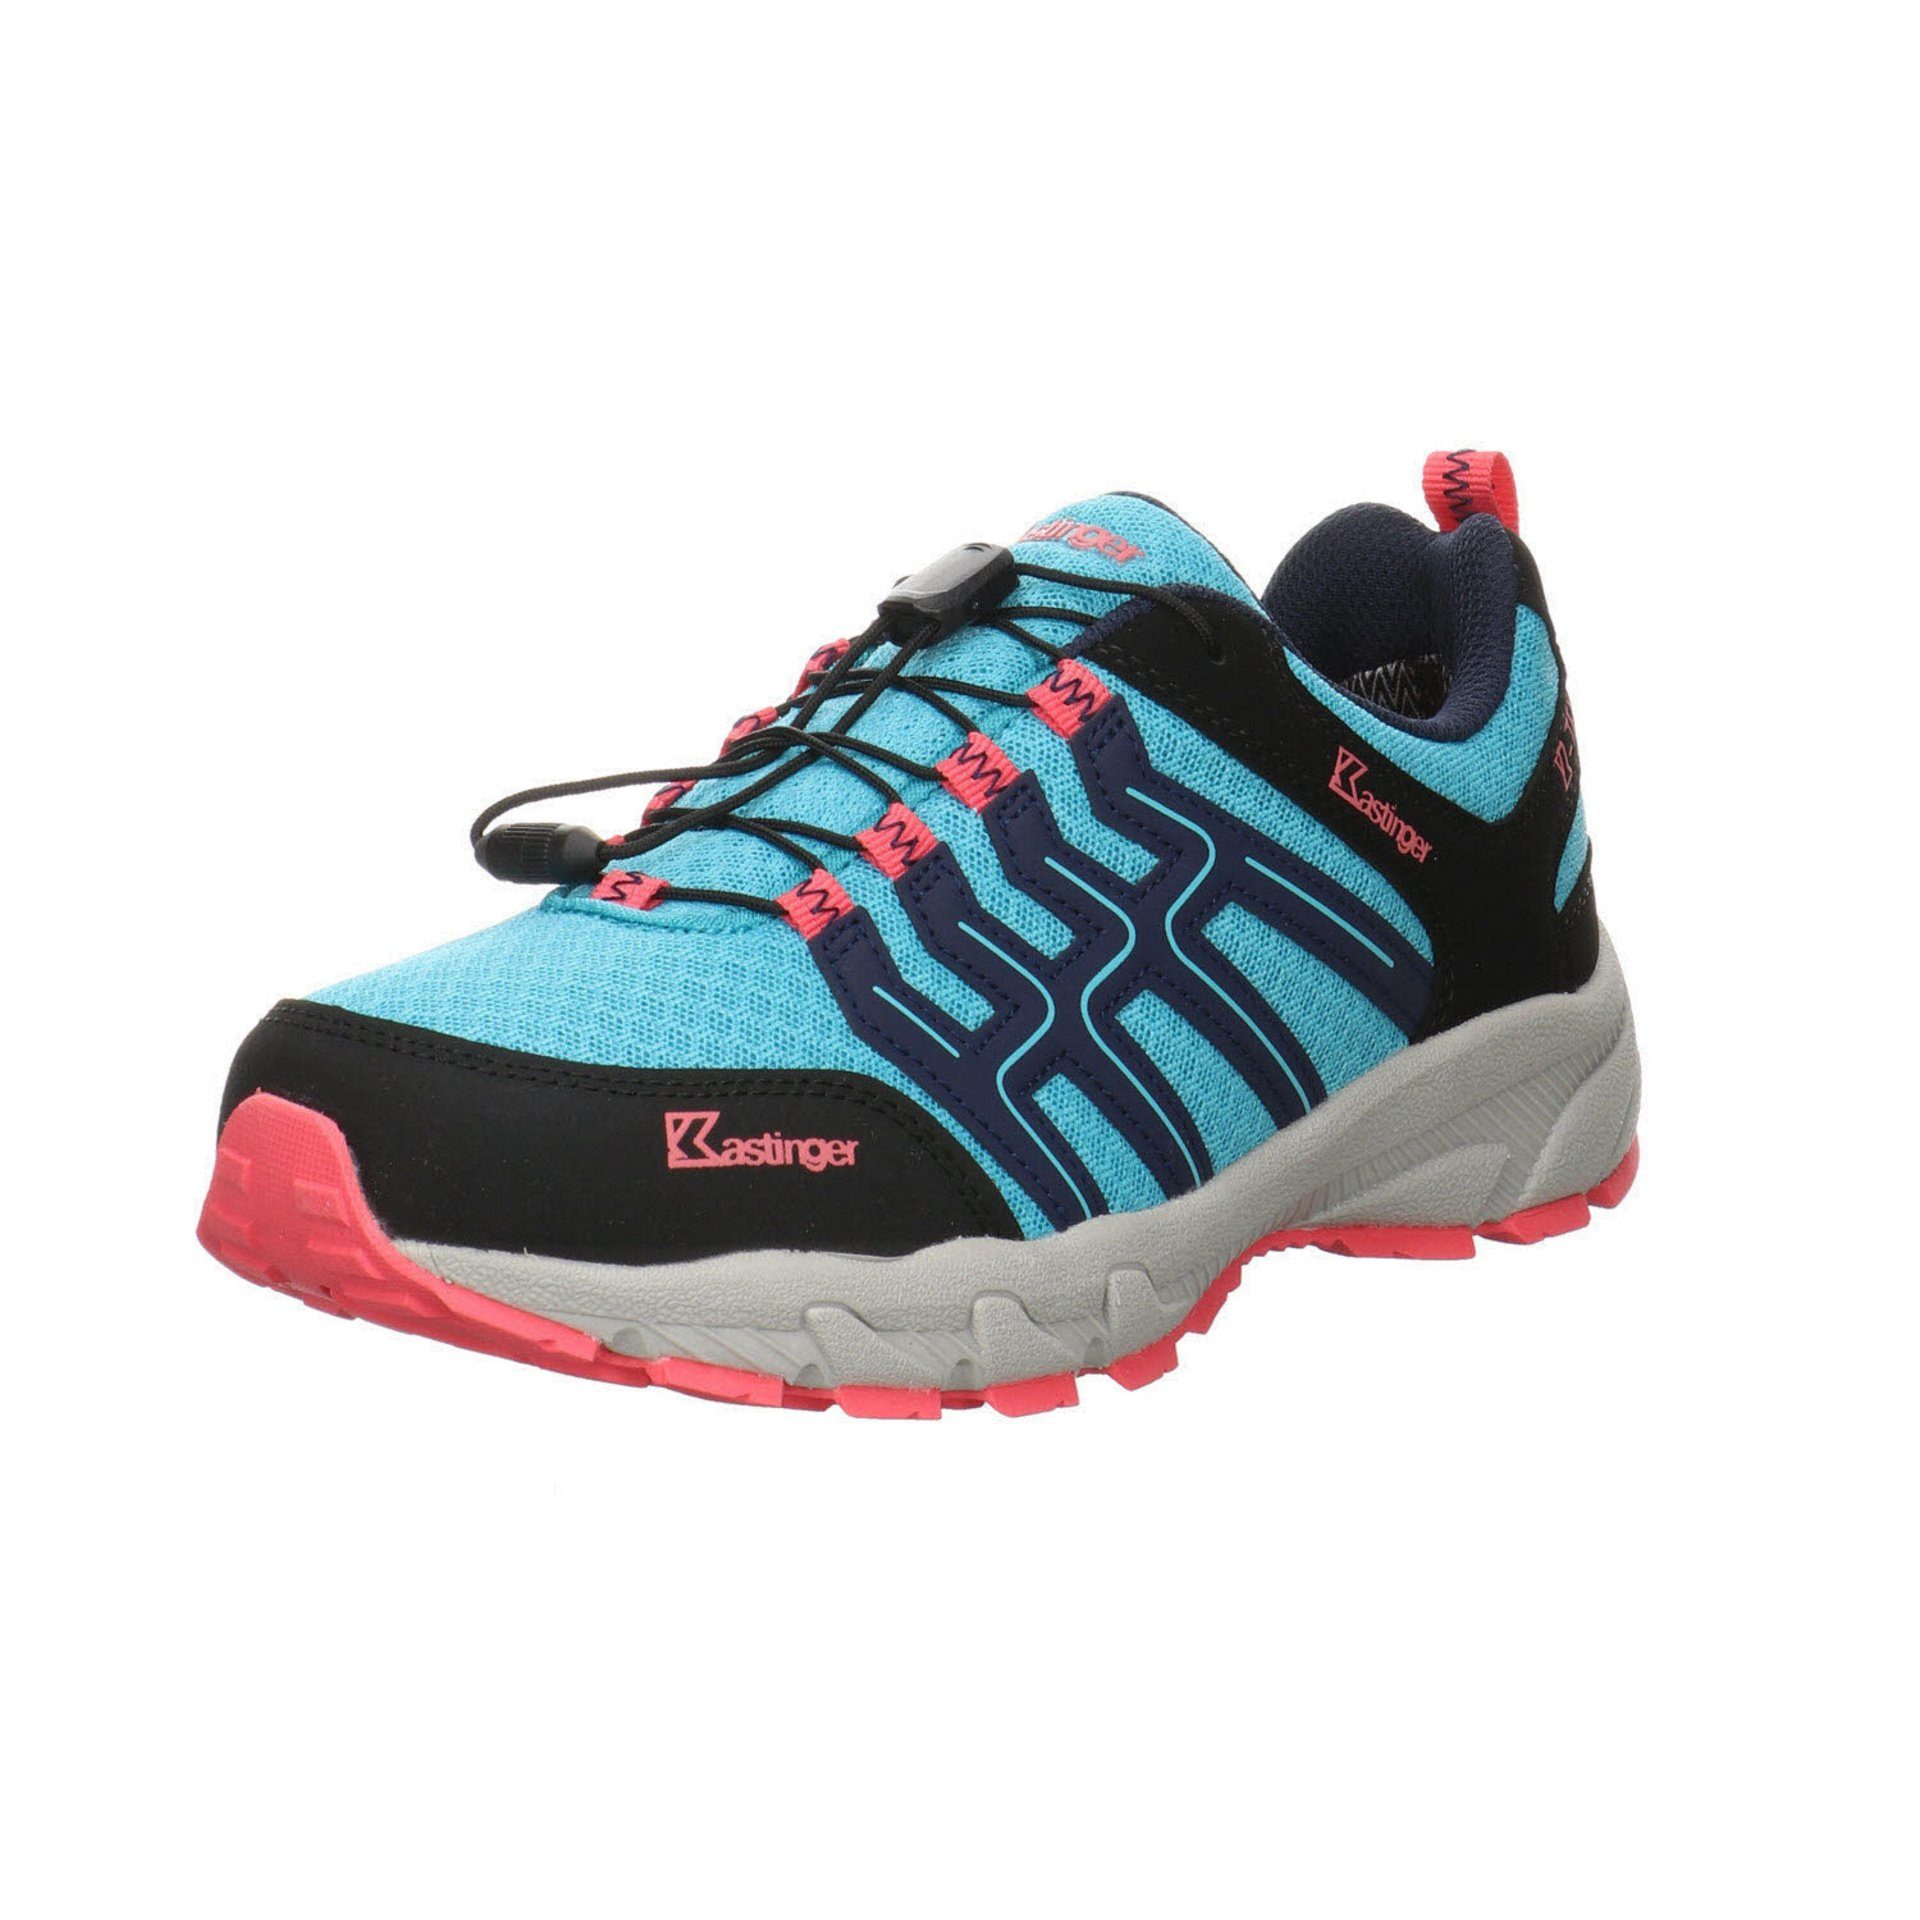 Kastinger Damen Schuhe Outdoor Trailrunner Outdoorschuh Outdoorschuh Synthetikkombination blau sonst Kombi | 